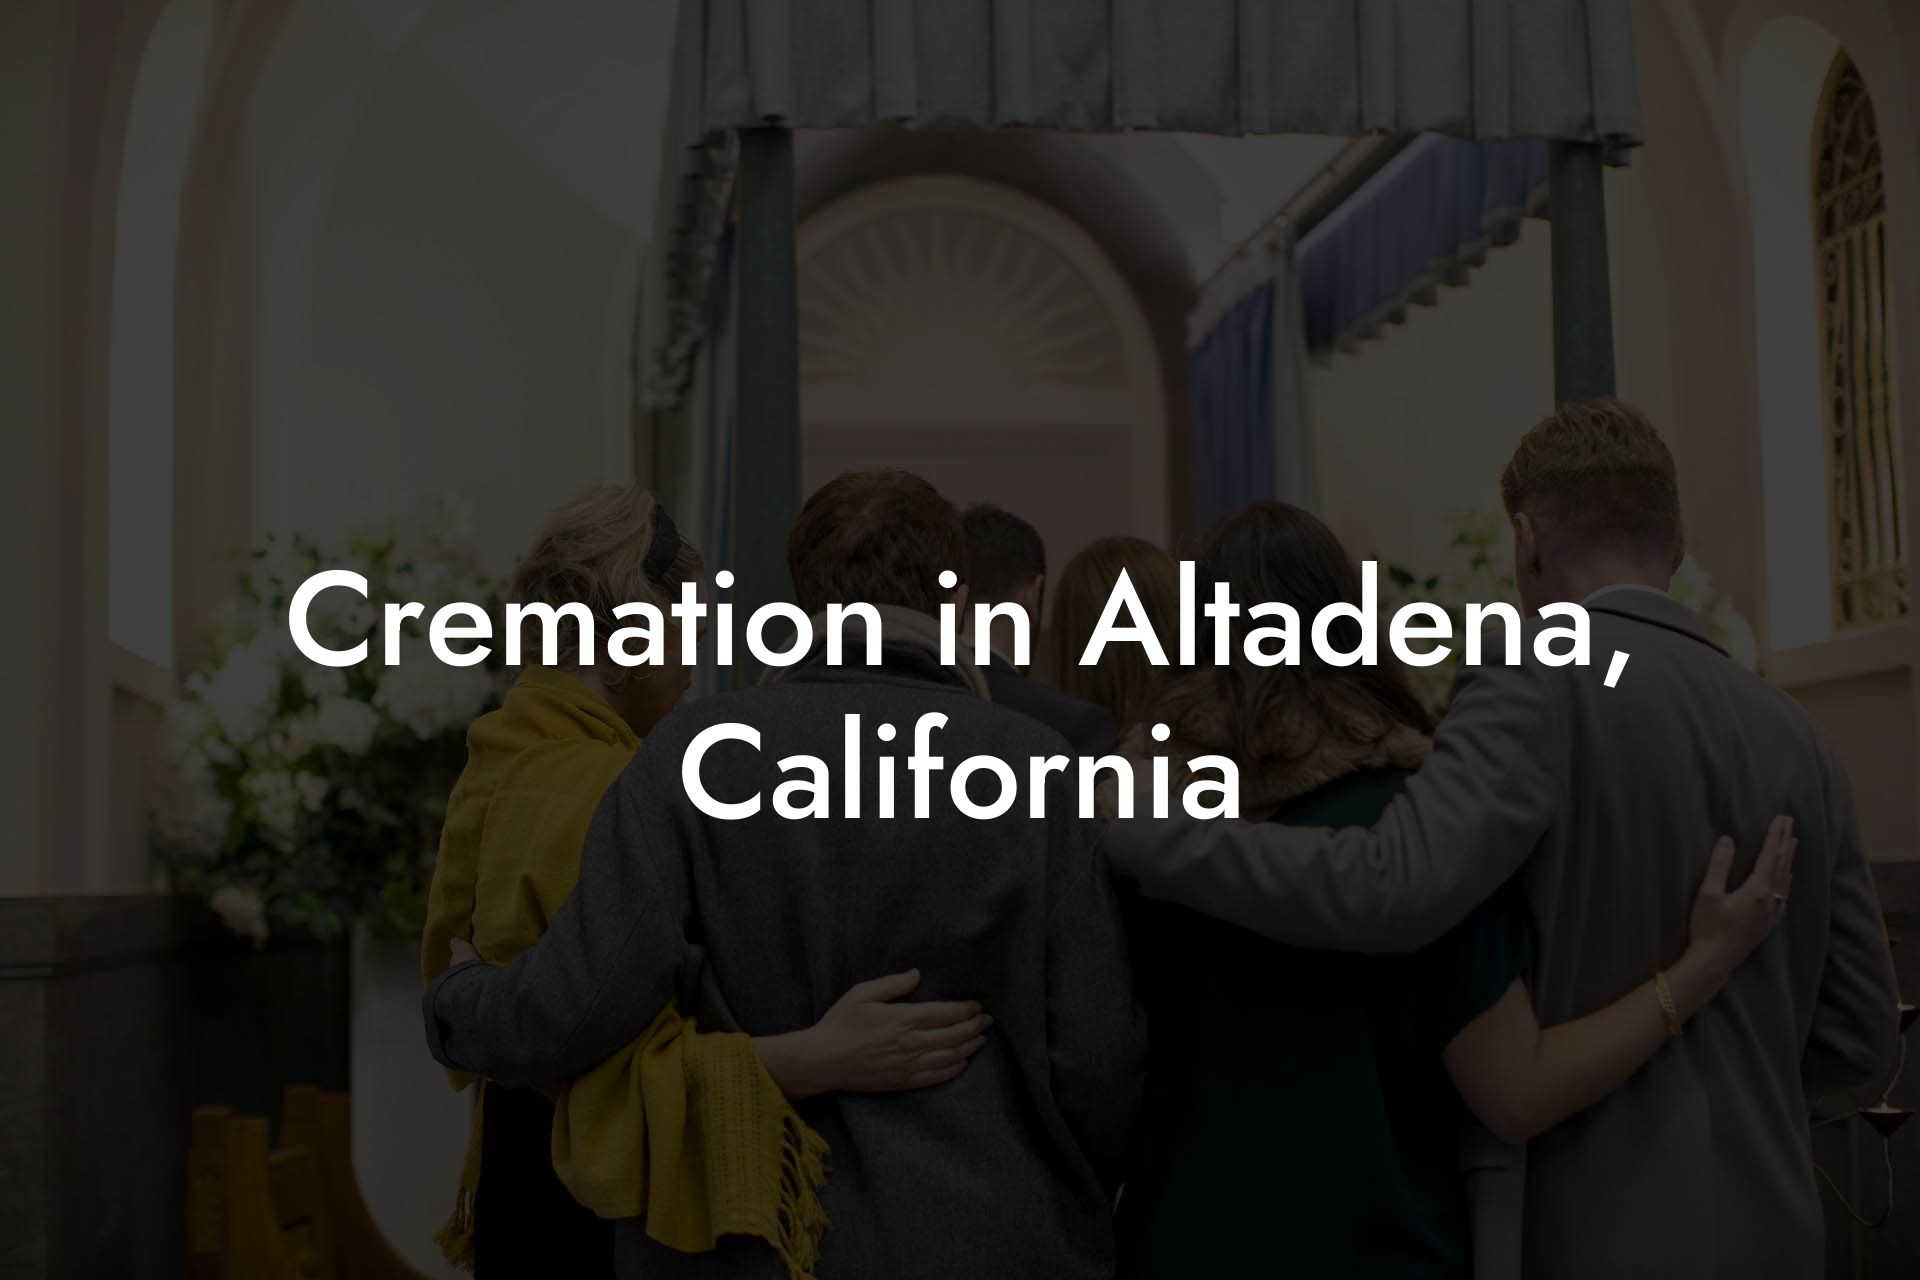 Cremation in Altadena, California